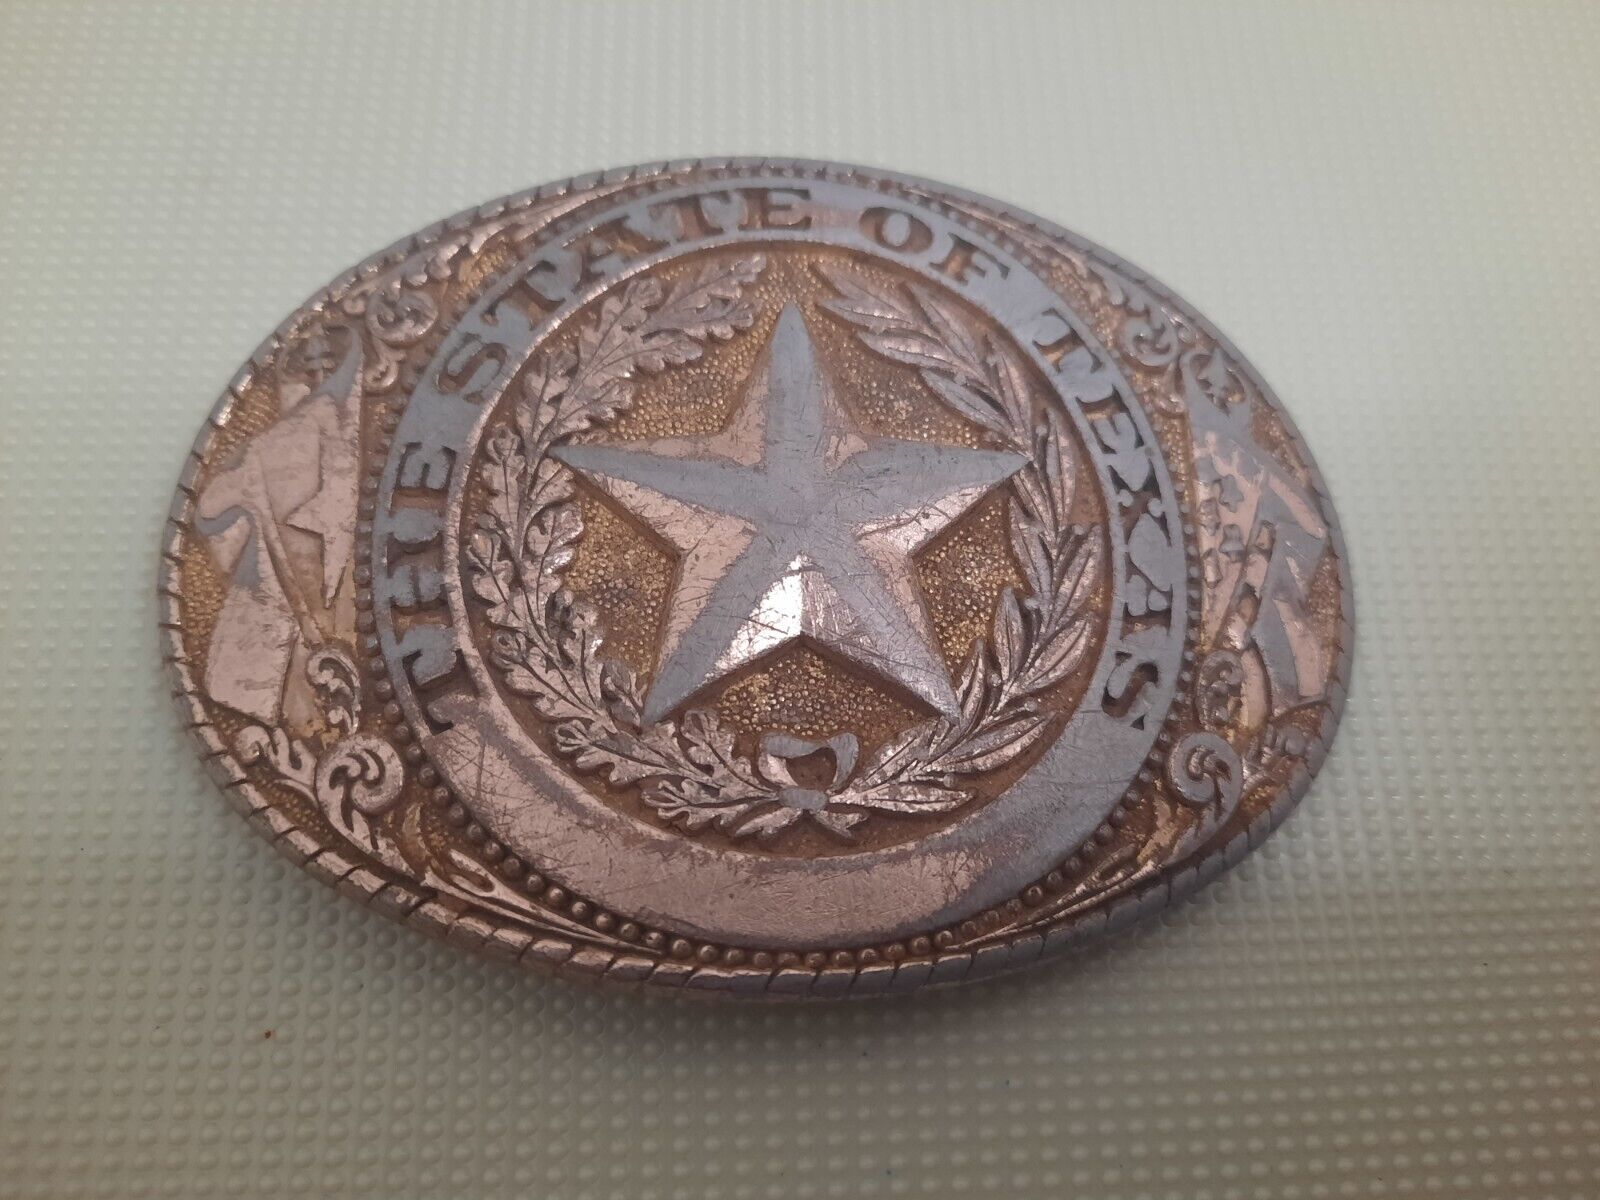 Vintage State of Texas Belt Buckle